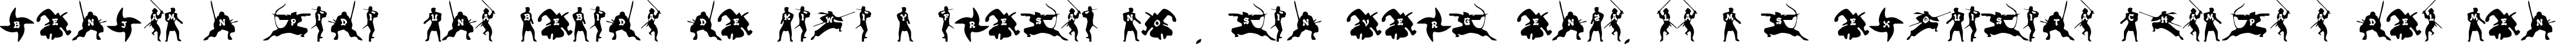 Пример написания шрифтом Ninjas текста на испанском